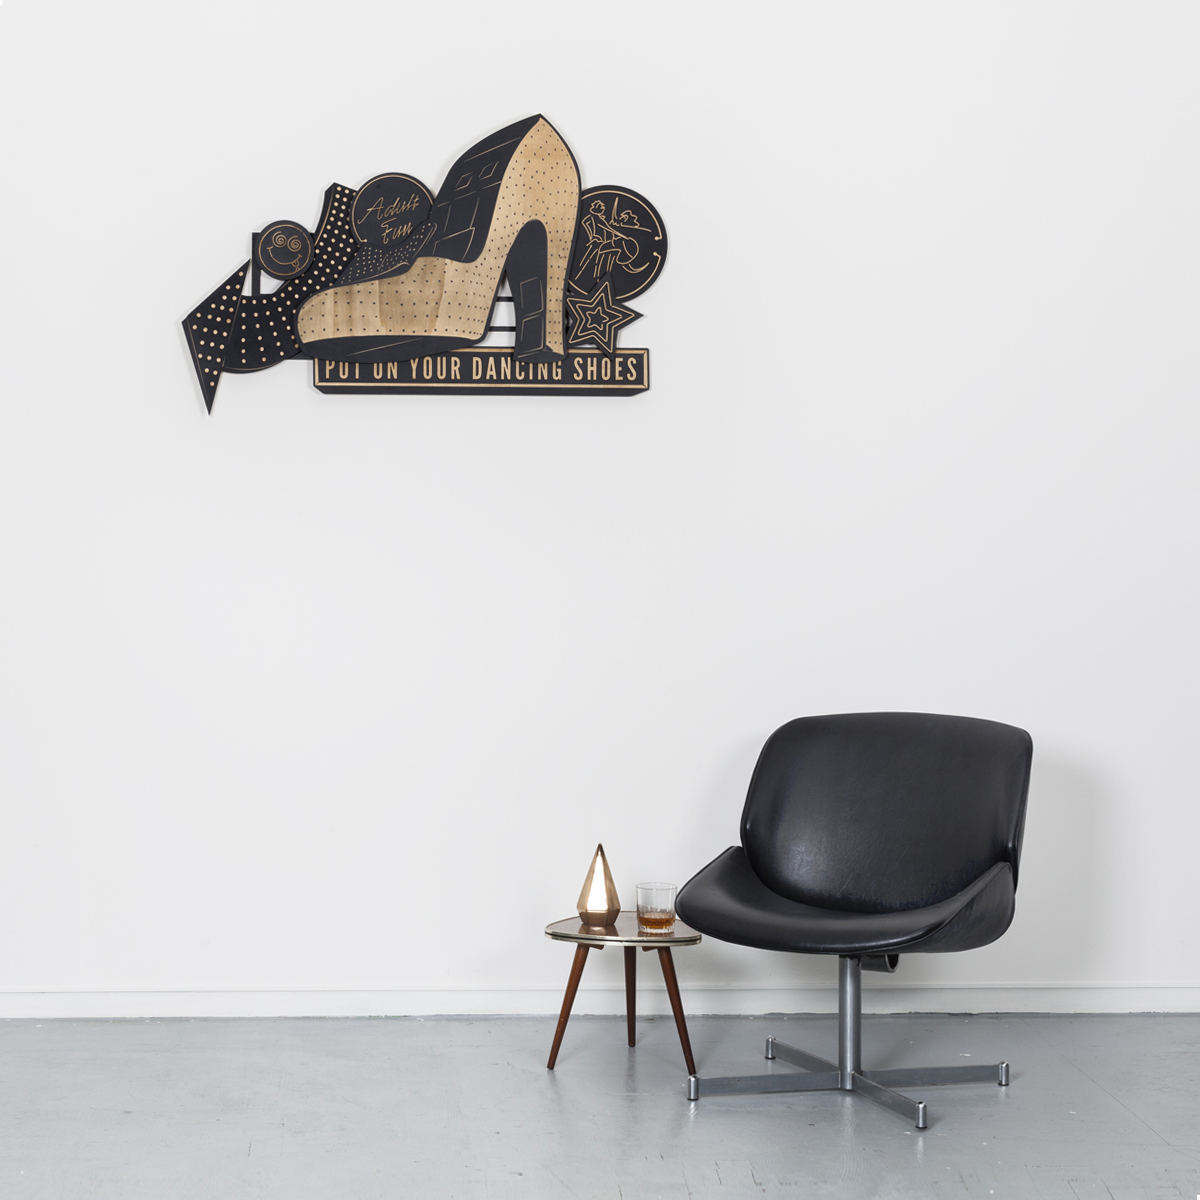 Studio Ruwedata - put on your dancing shoes - wall sculpture artwork